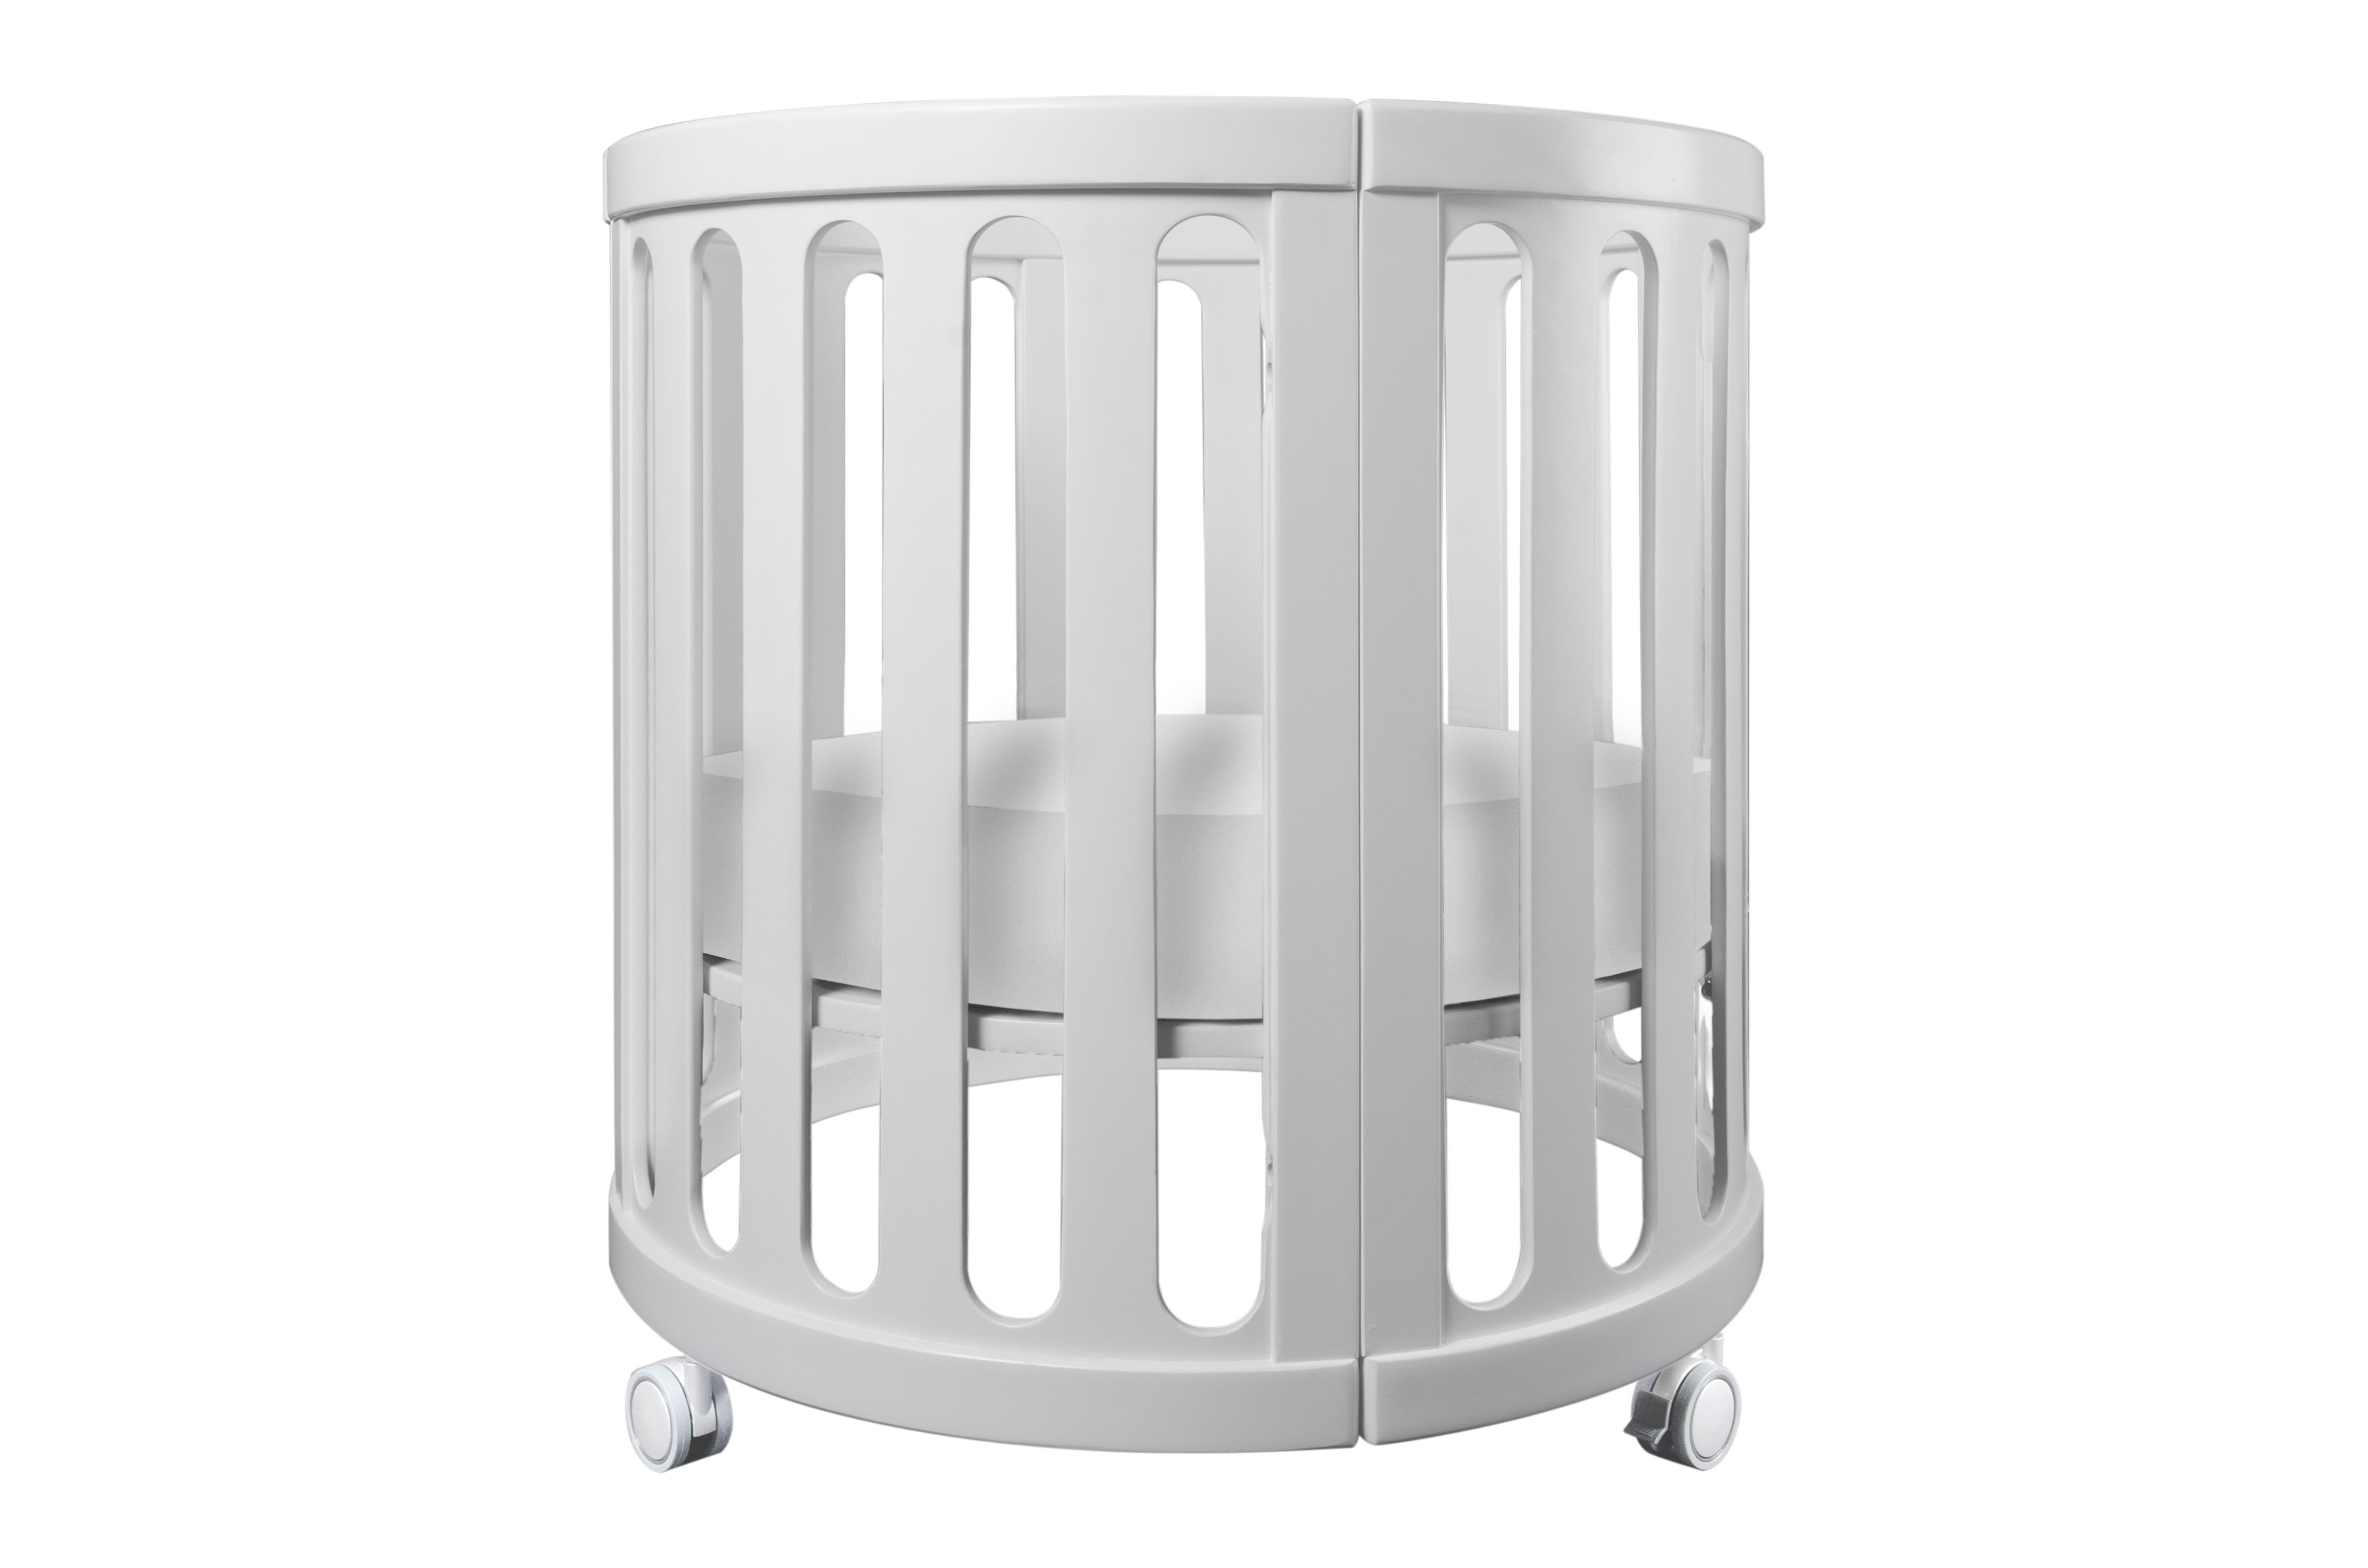 all modern crib